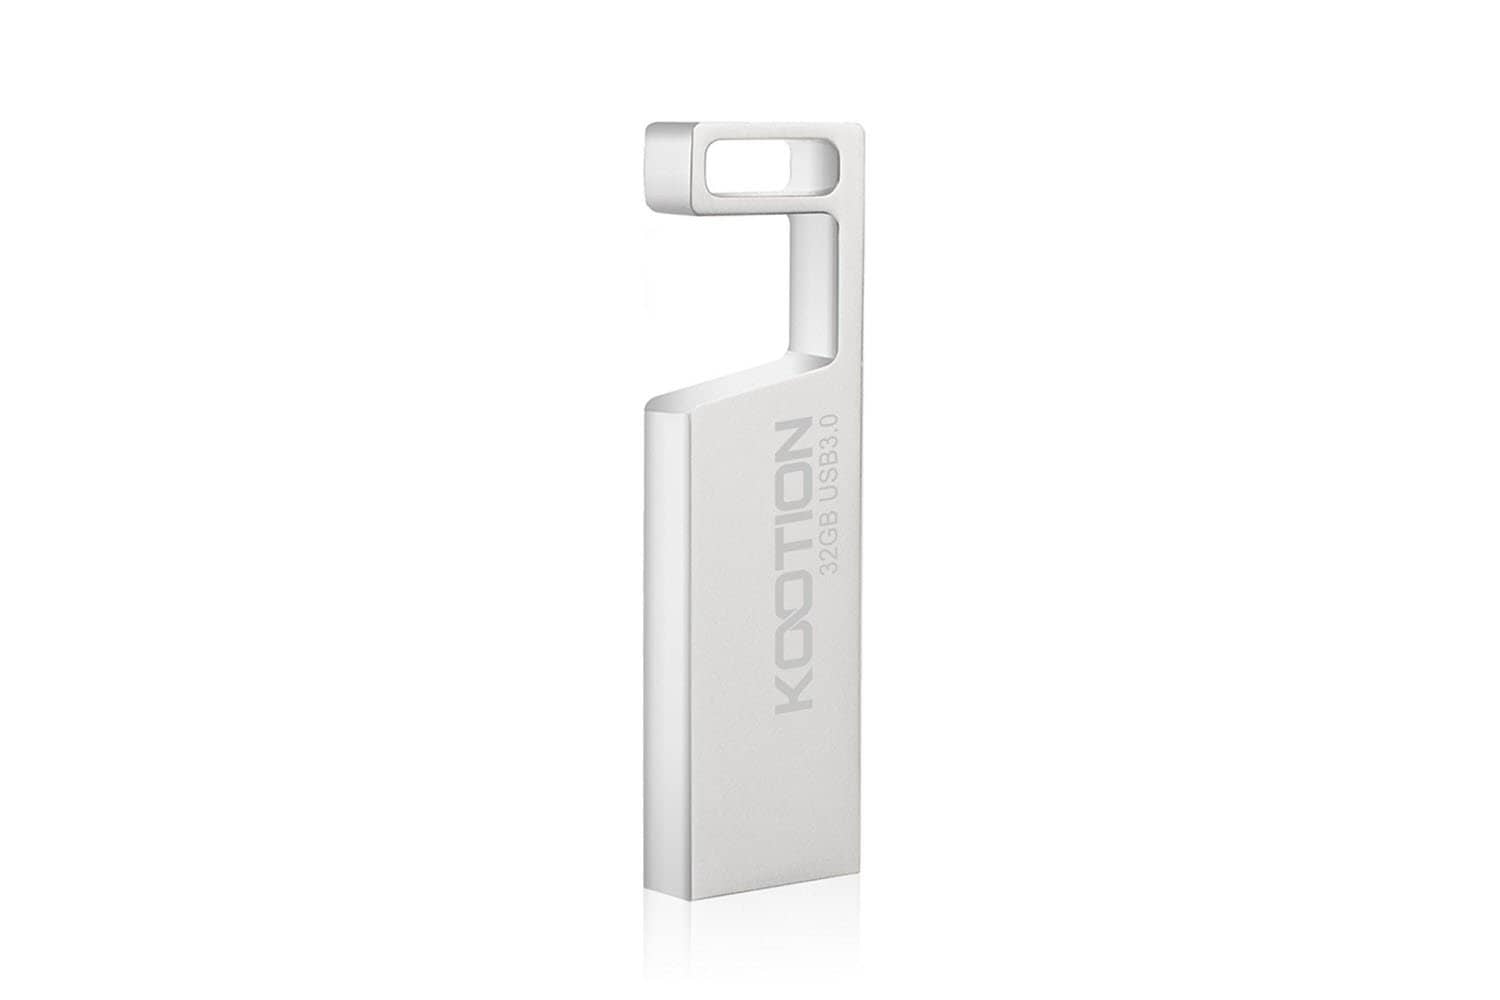 KOOTION 64GB USB 3.0 Flash Drive Waterproof